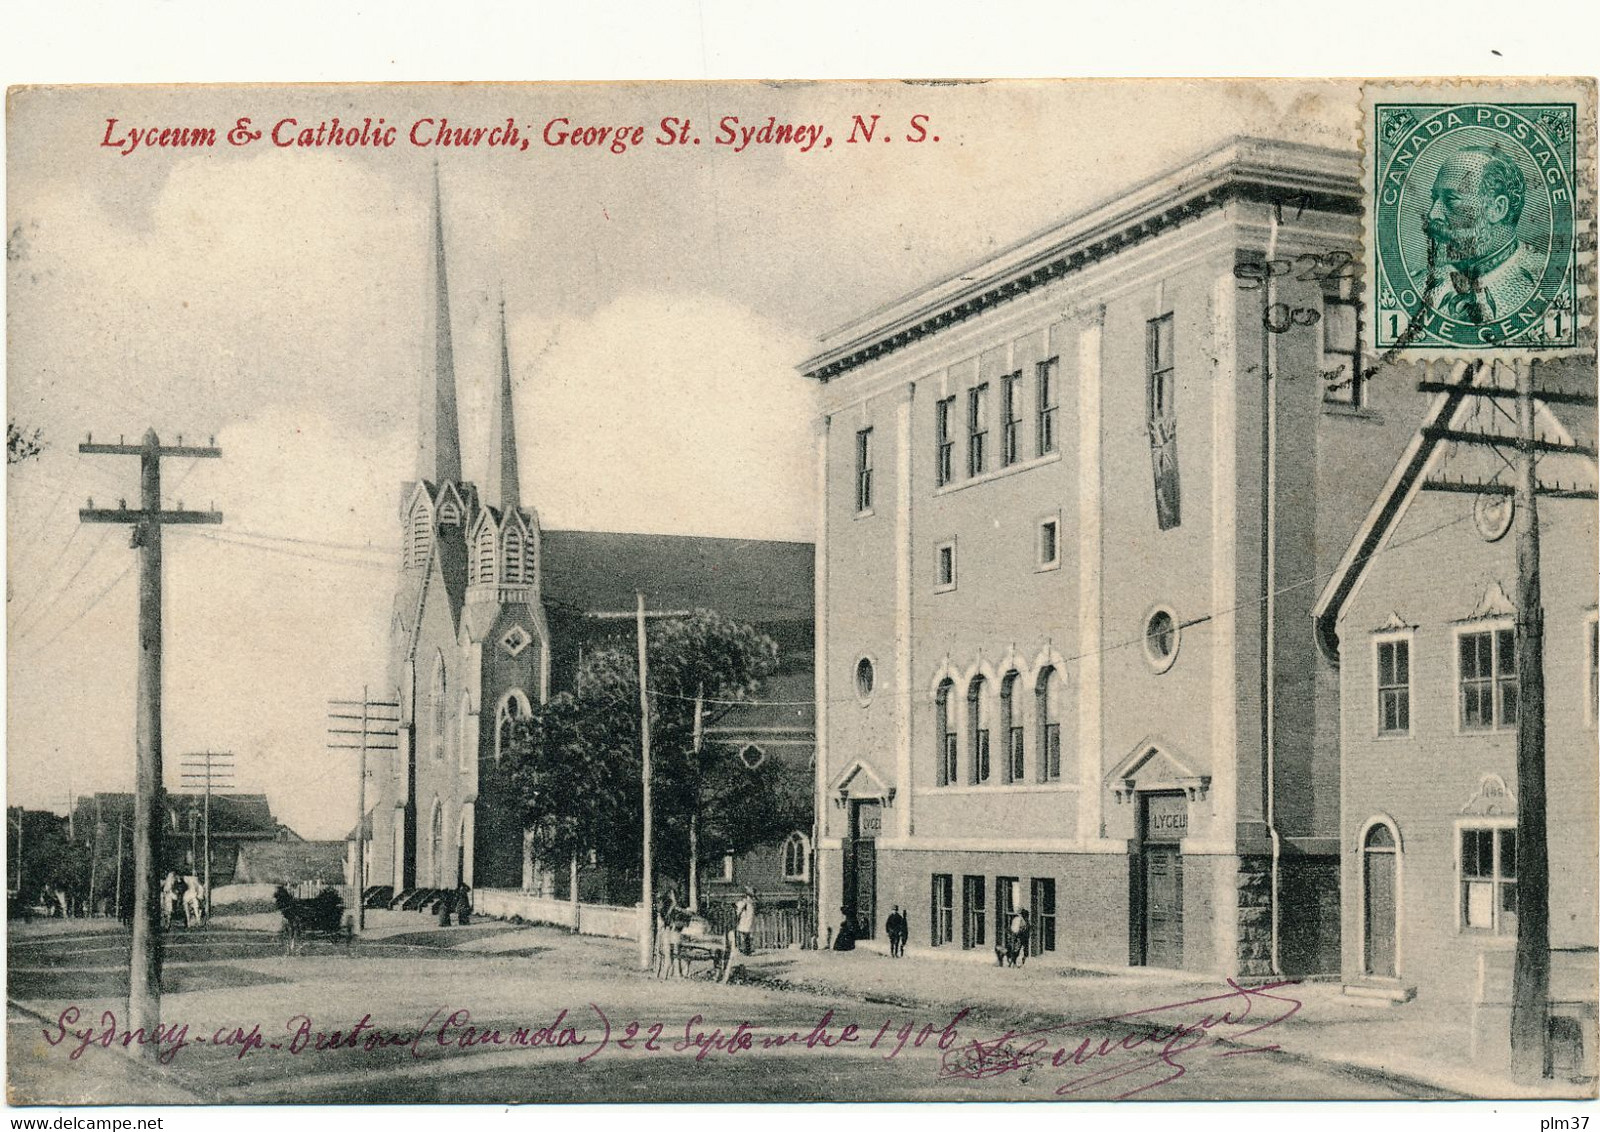 SYDNEY, N.S. - Lyceum & Catholic Church - Cape Breton